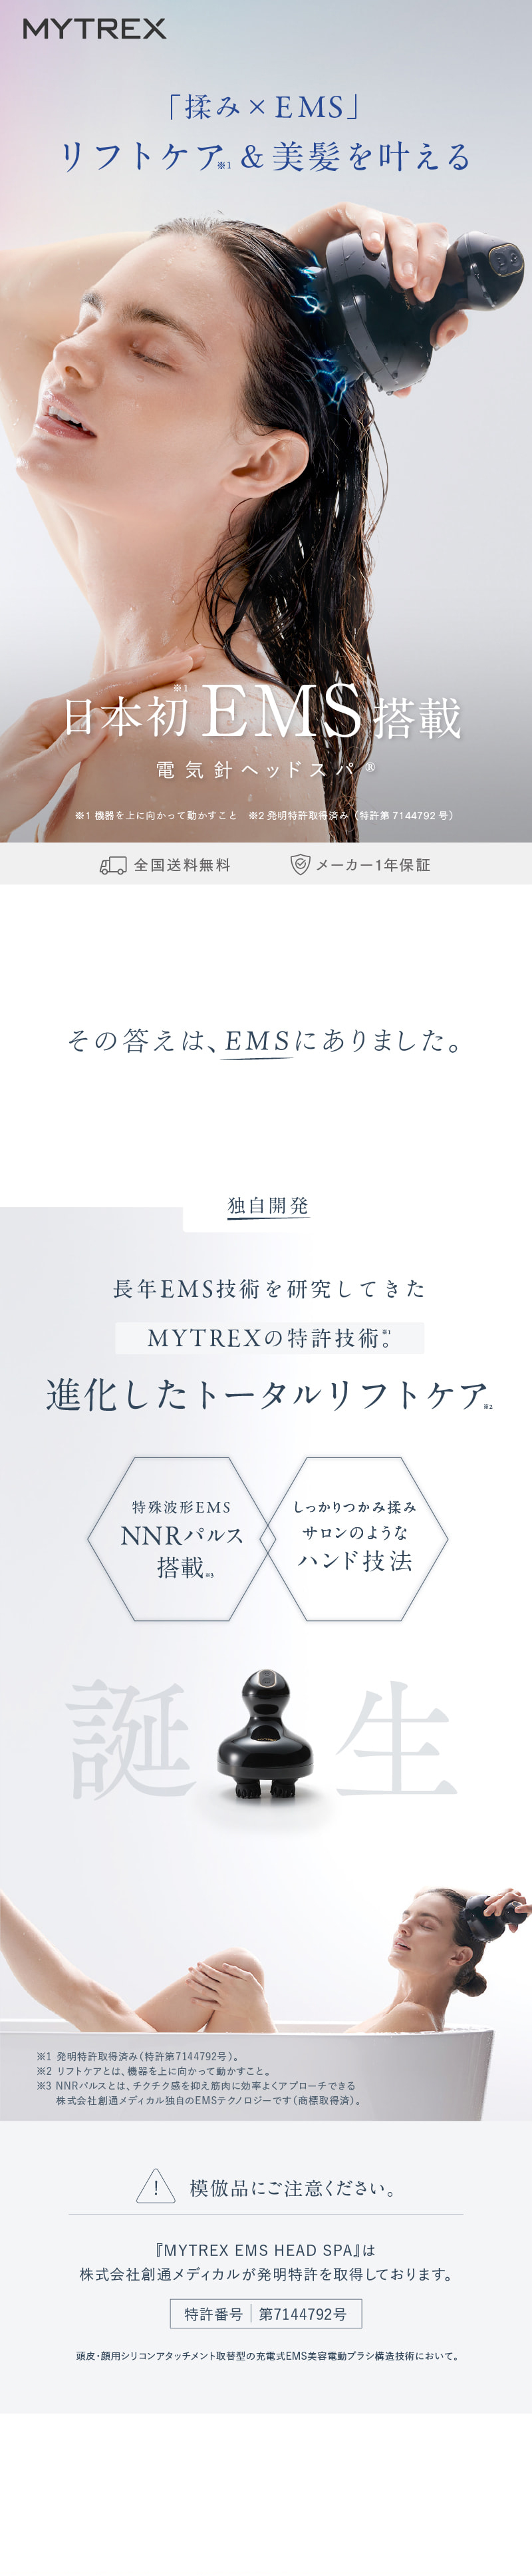 MYTREX EMS HEAD SPA 電気針ヘッドスパ 3/27放送ジャンクSPORTS 紹介 ...